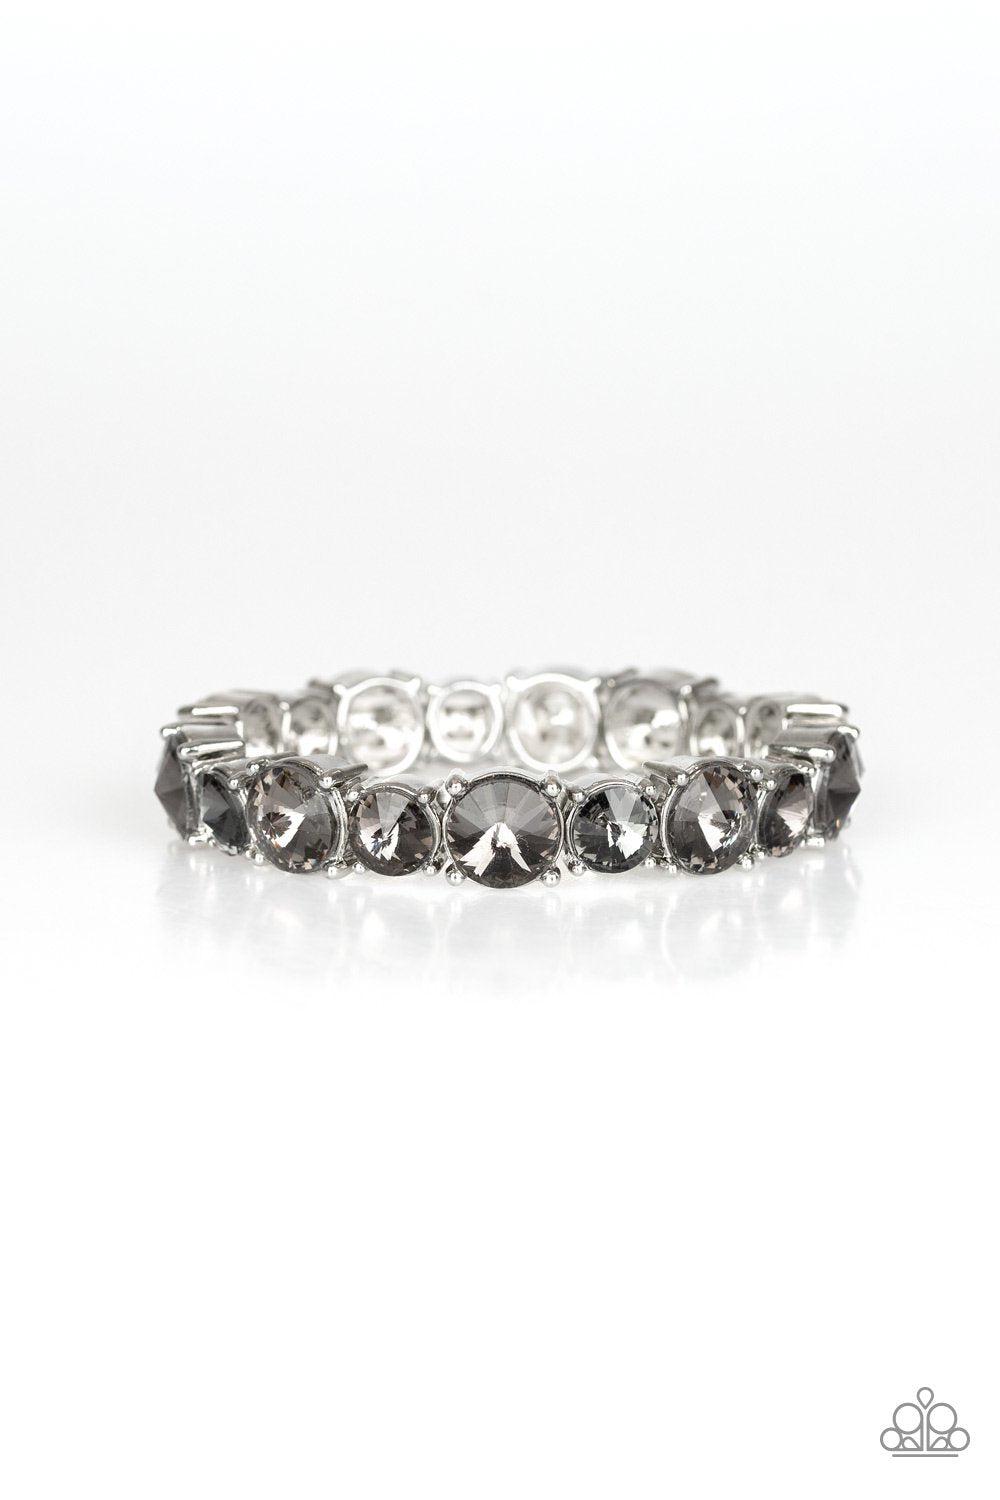 Born to Bedazzle Silver Rhinestone Bracelet - Paparazzi Accessories-CarasShop.com - $5 Jewelry by Cara Jewels